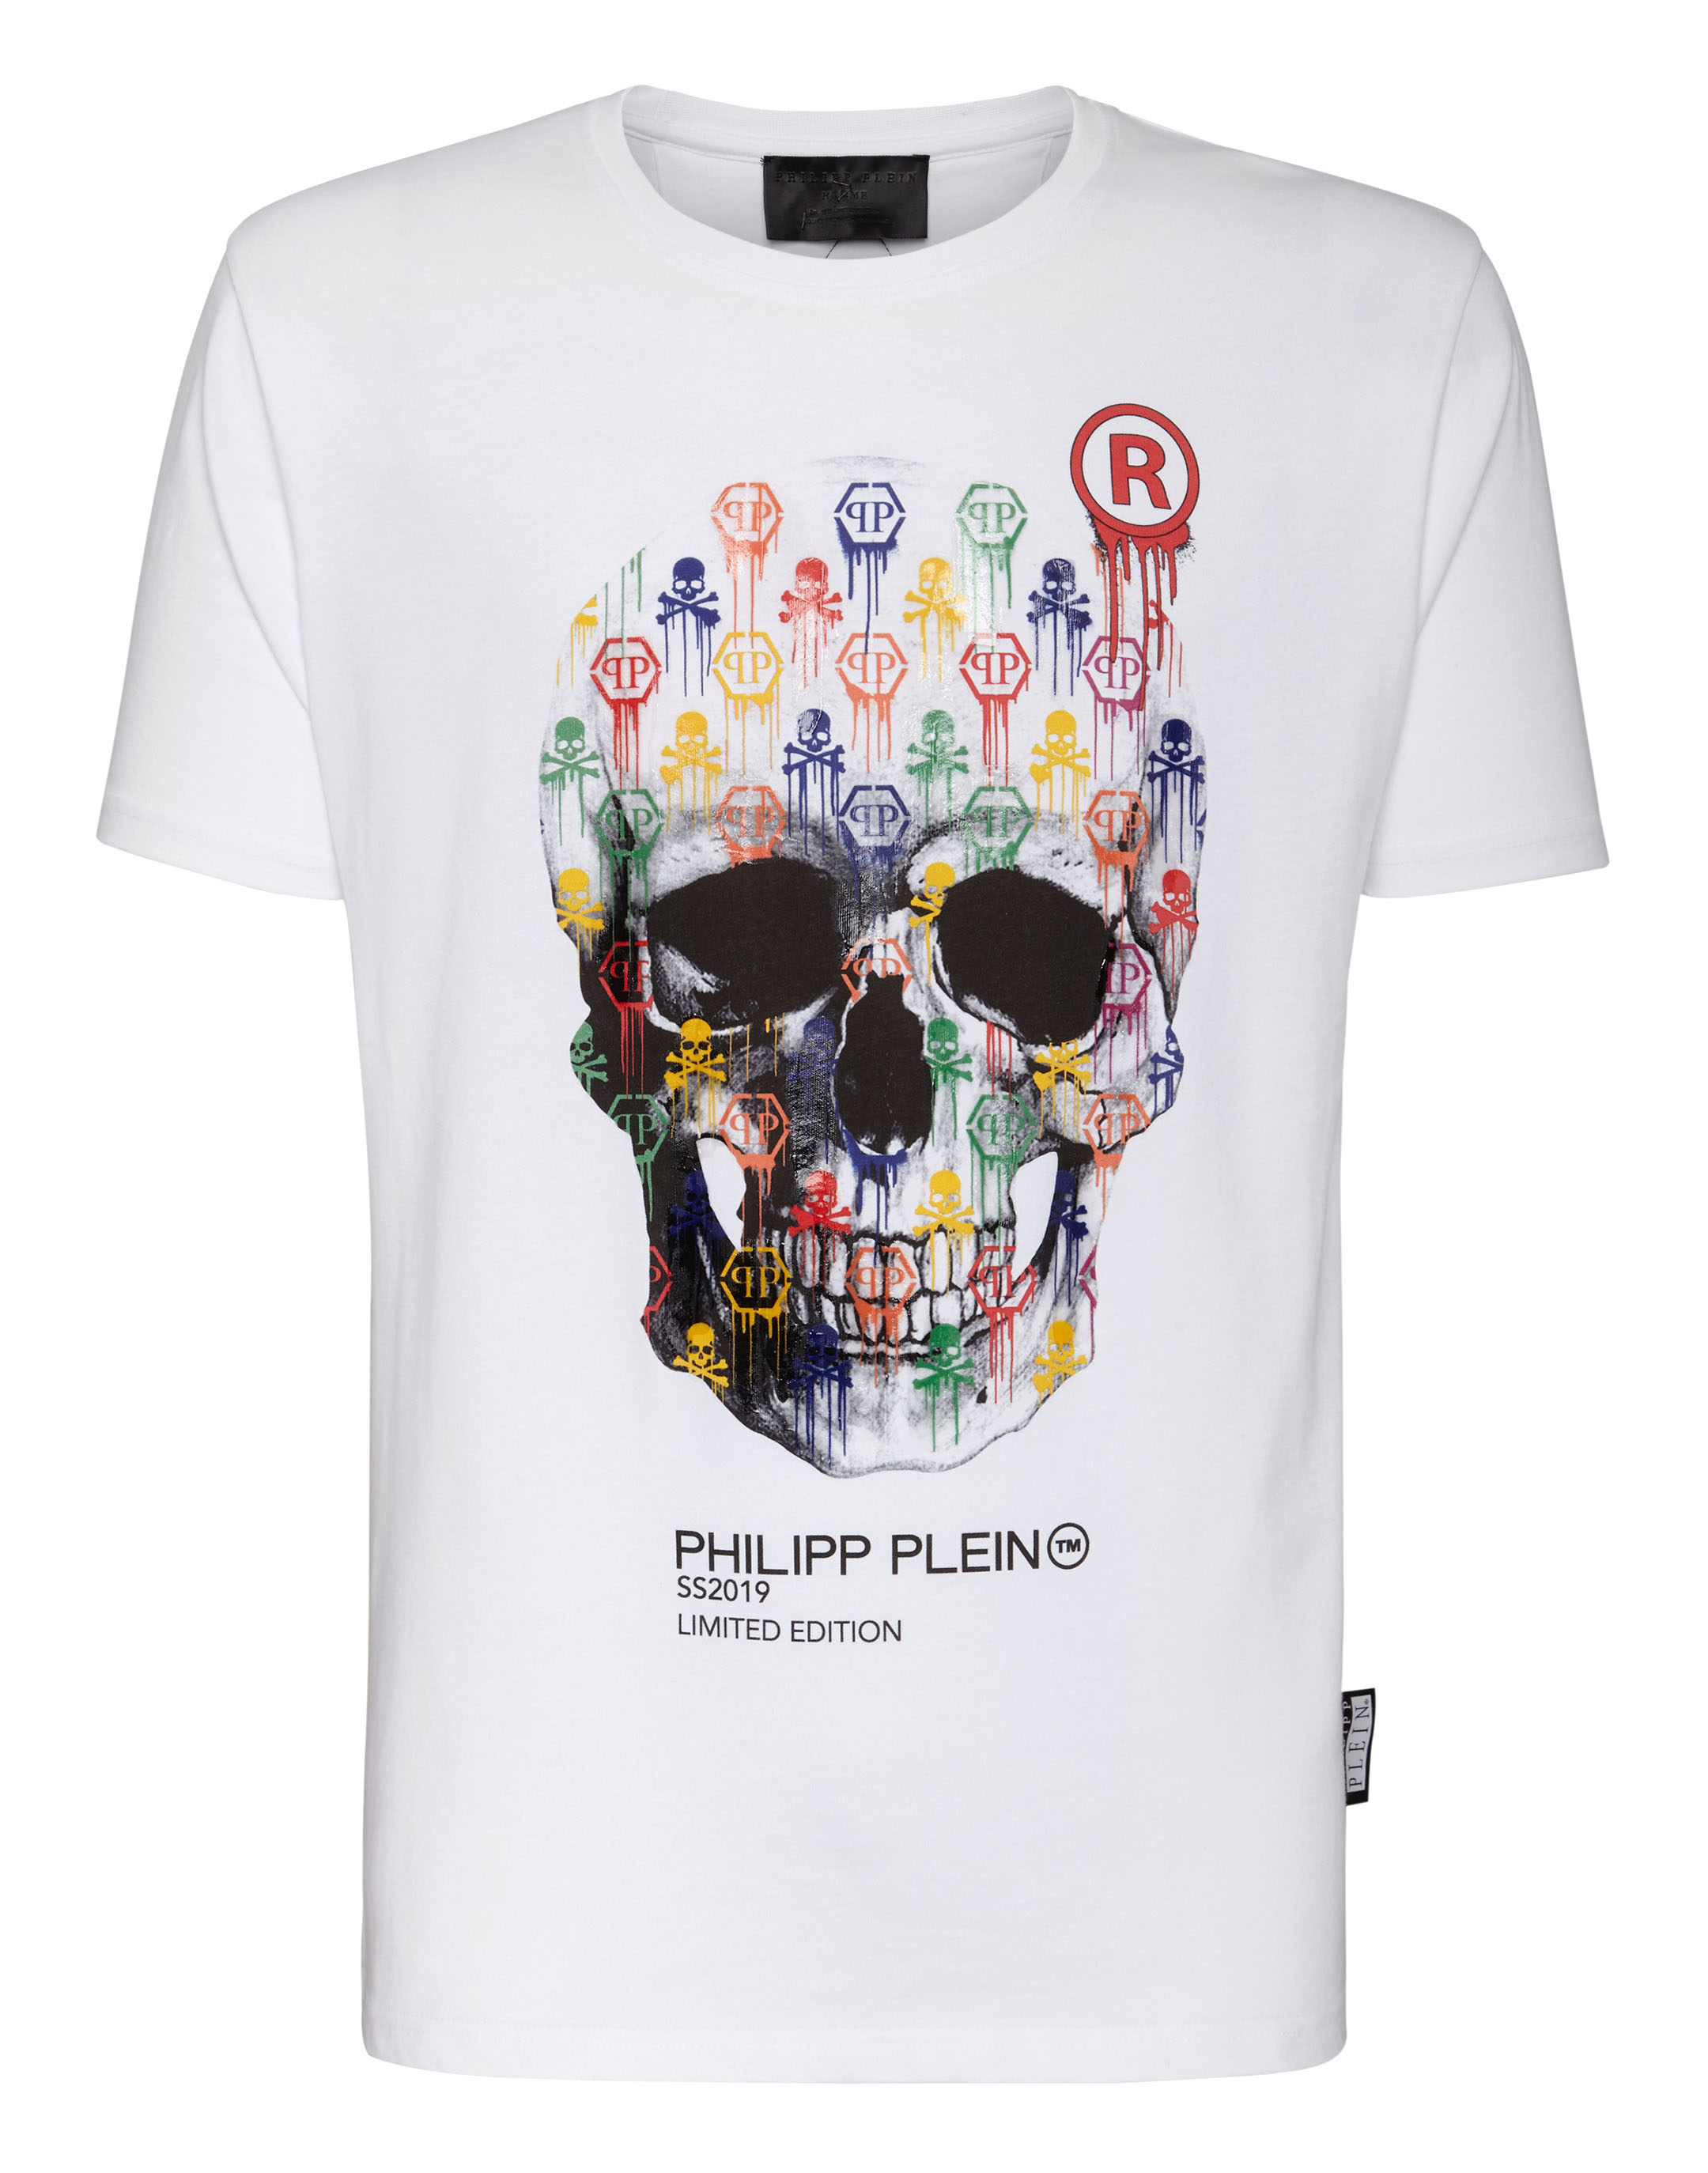 philipp plein t-shirt limited edition